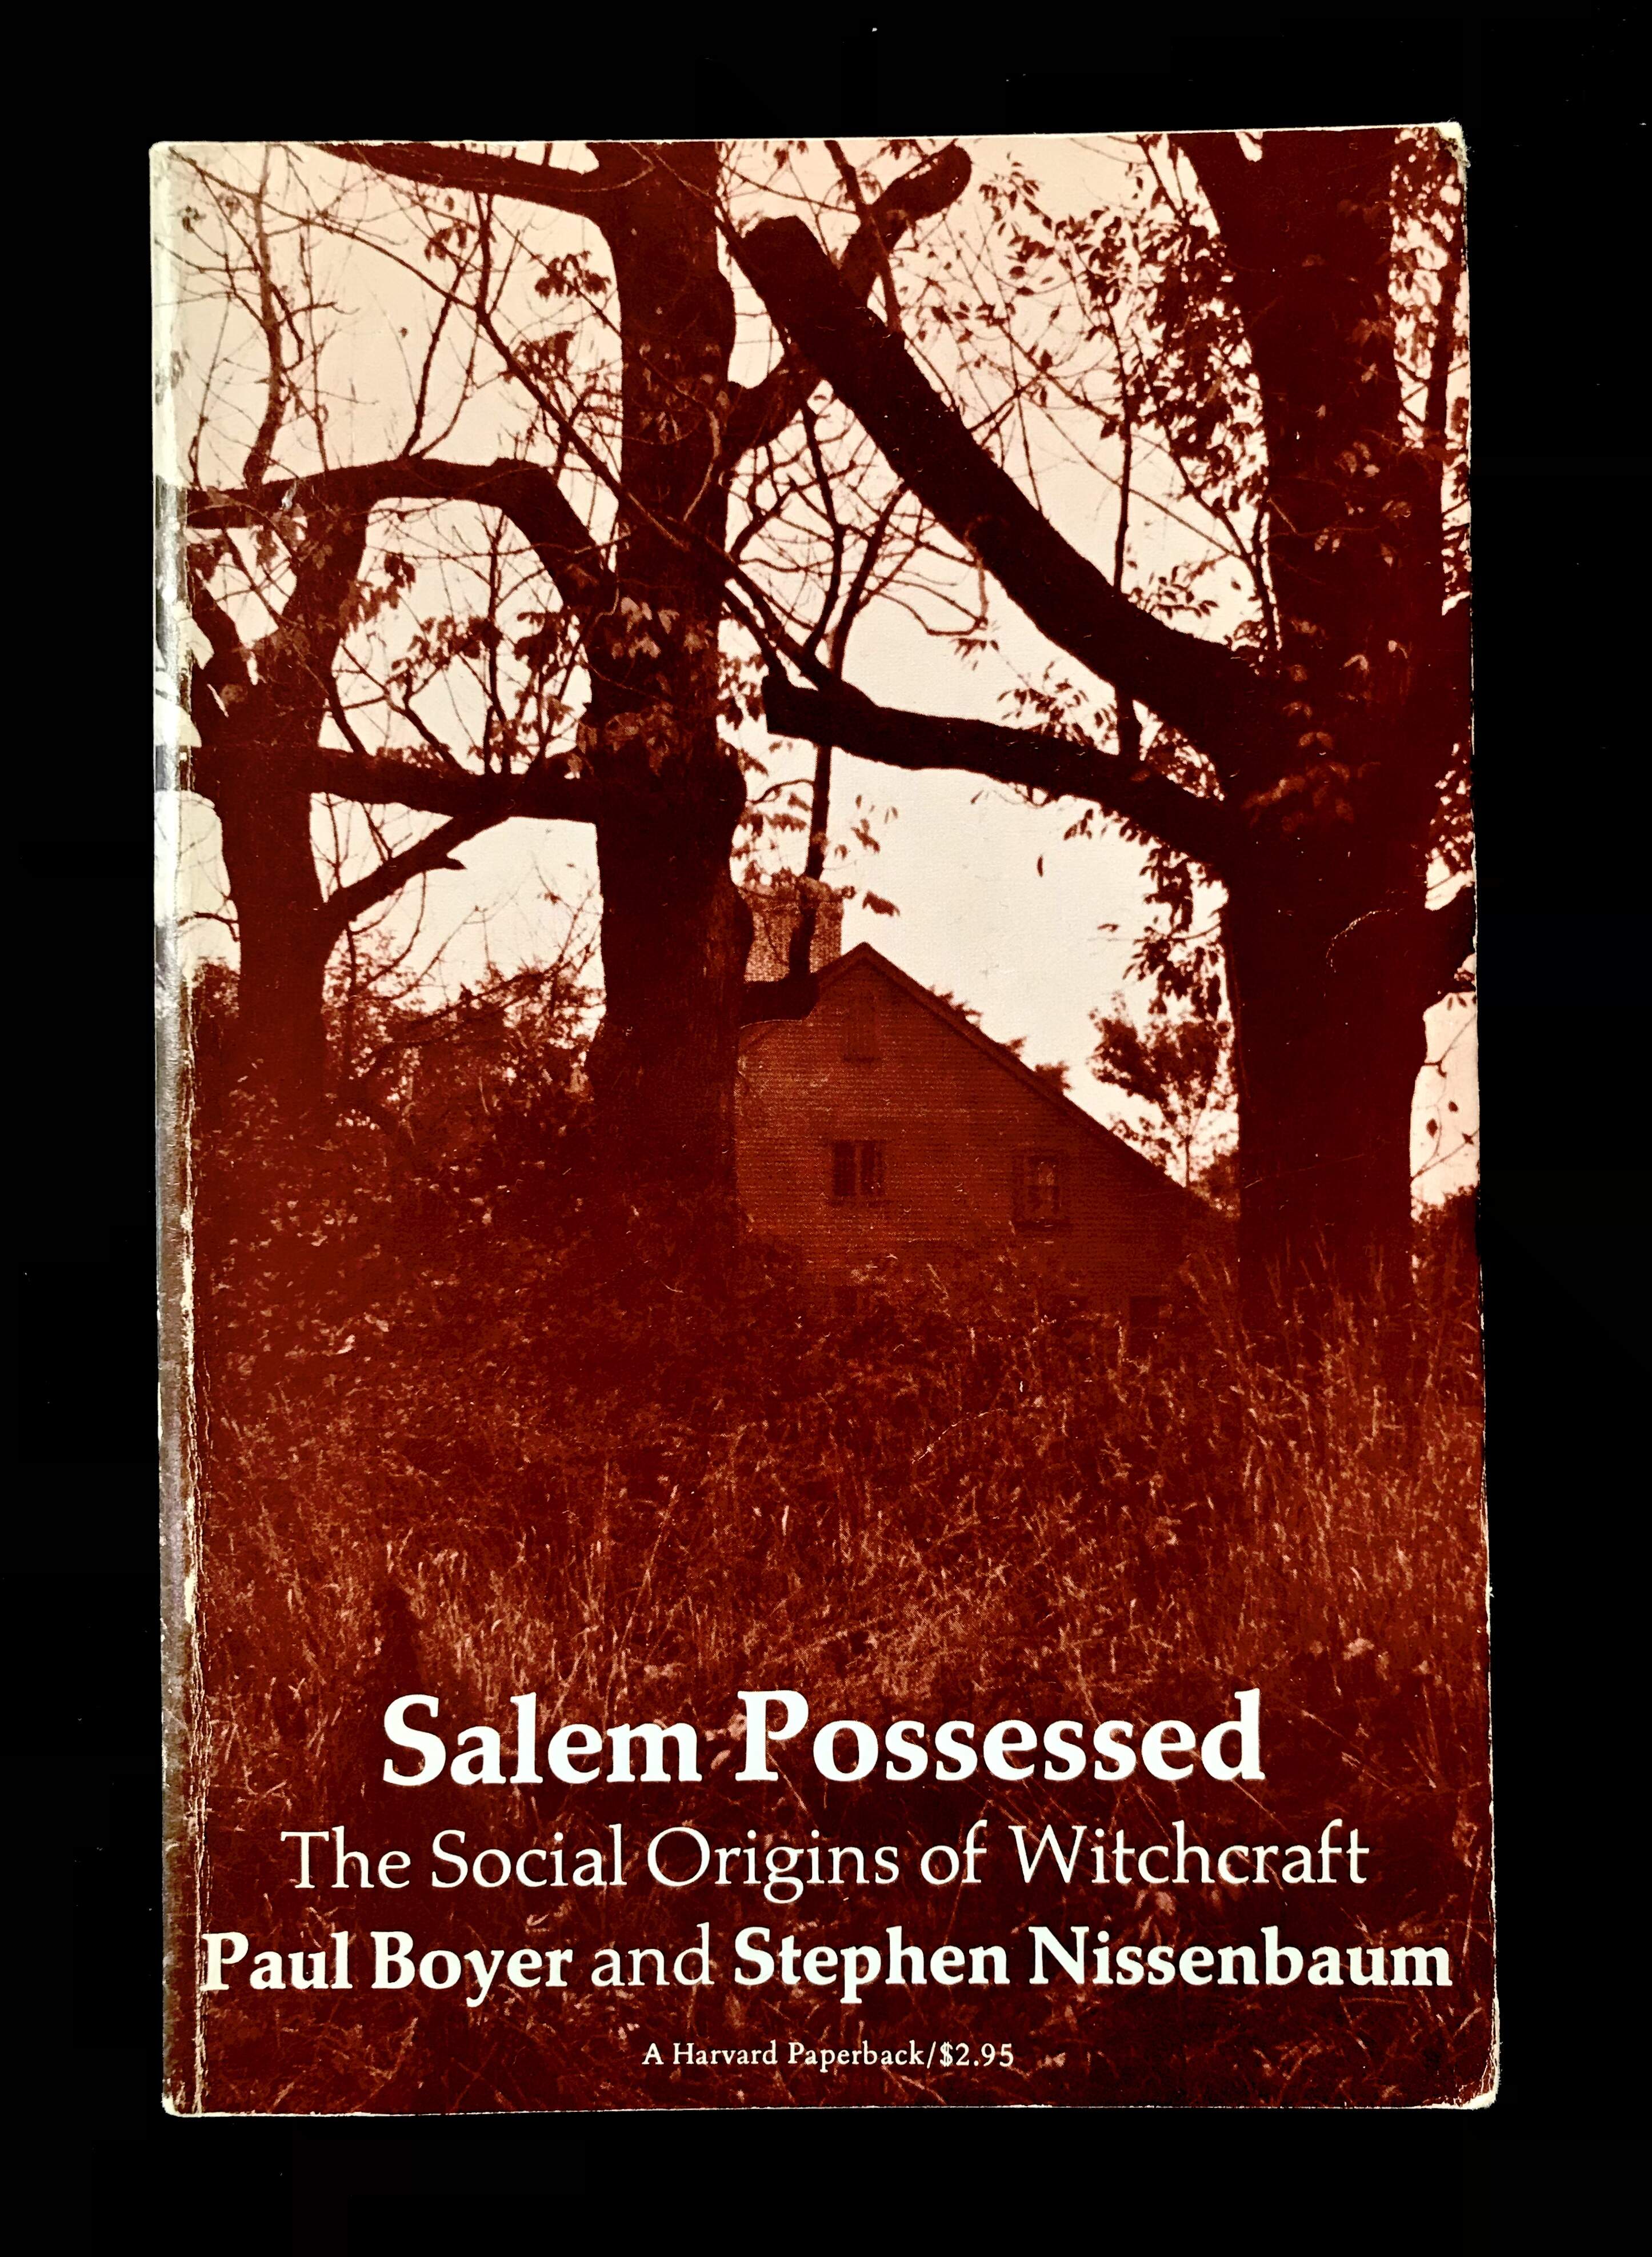 Salem Possessed: The Social Origins of Witchcraft by Paul Boyer & Stephen Nissenbaum